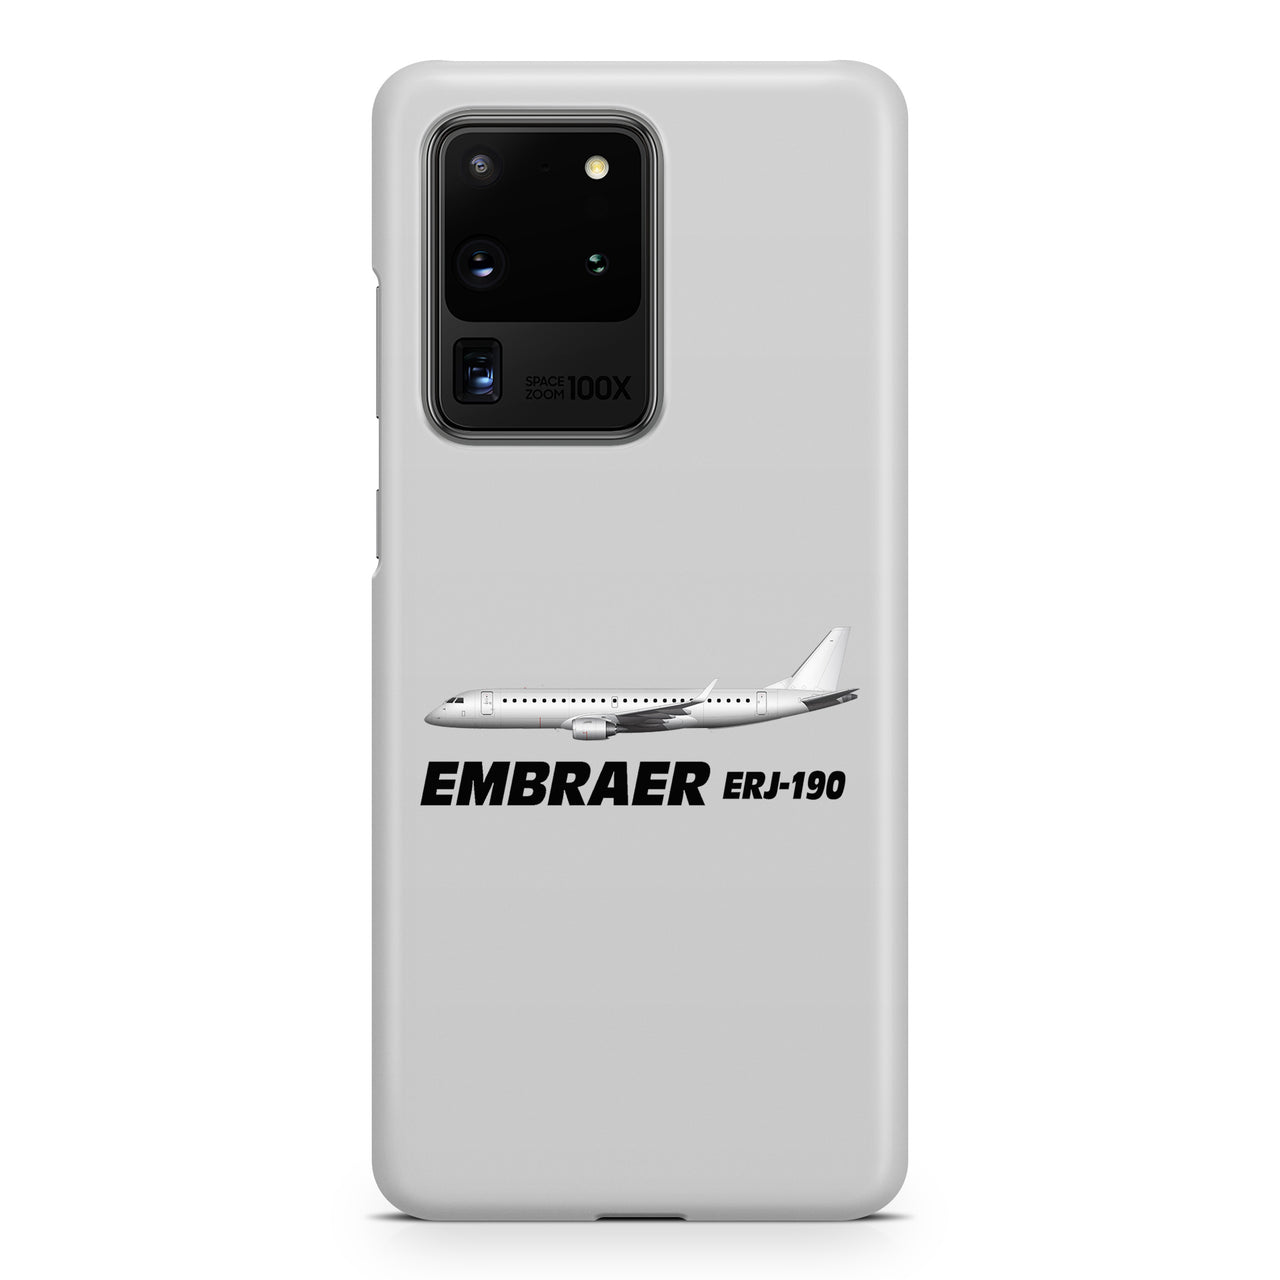 The Embraer ERJ-190 Samsung A Cases